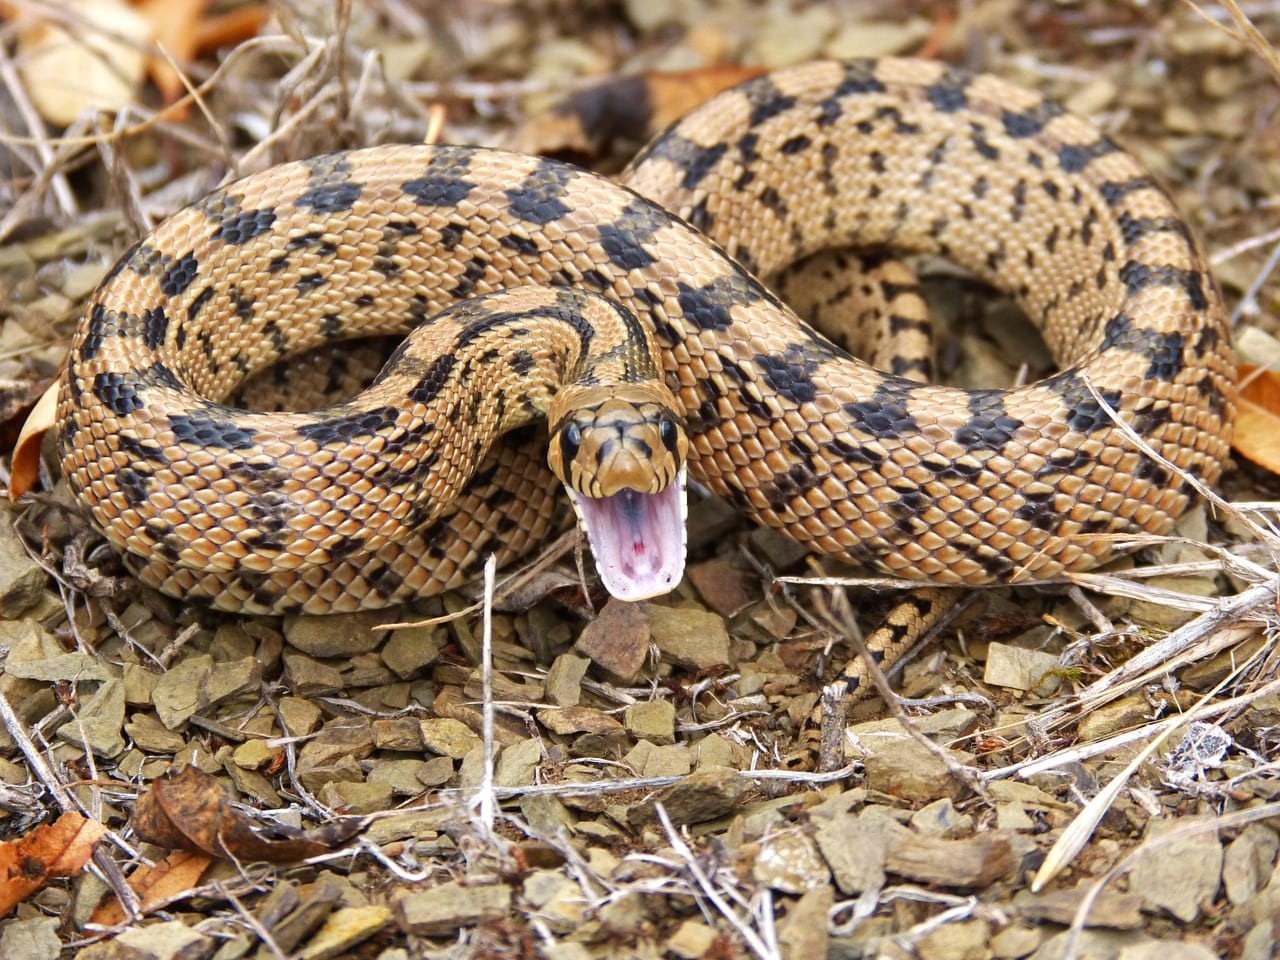 https://pixabay.com/en/snake-threat-brown-mountain-eight-1010085/